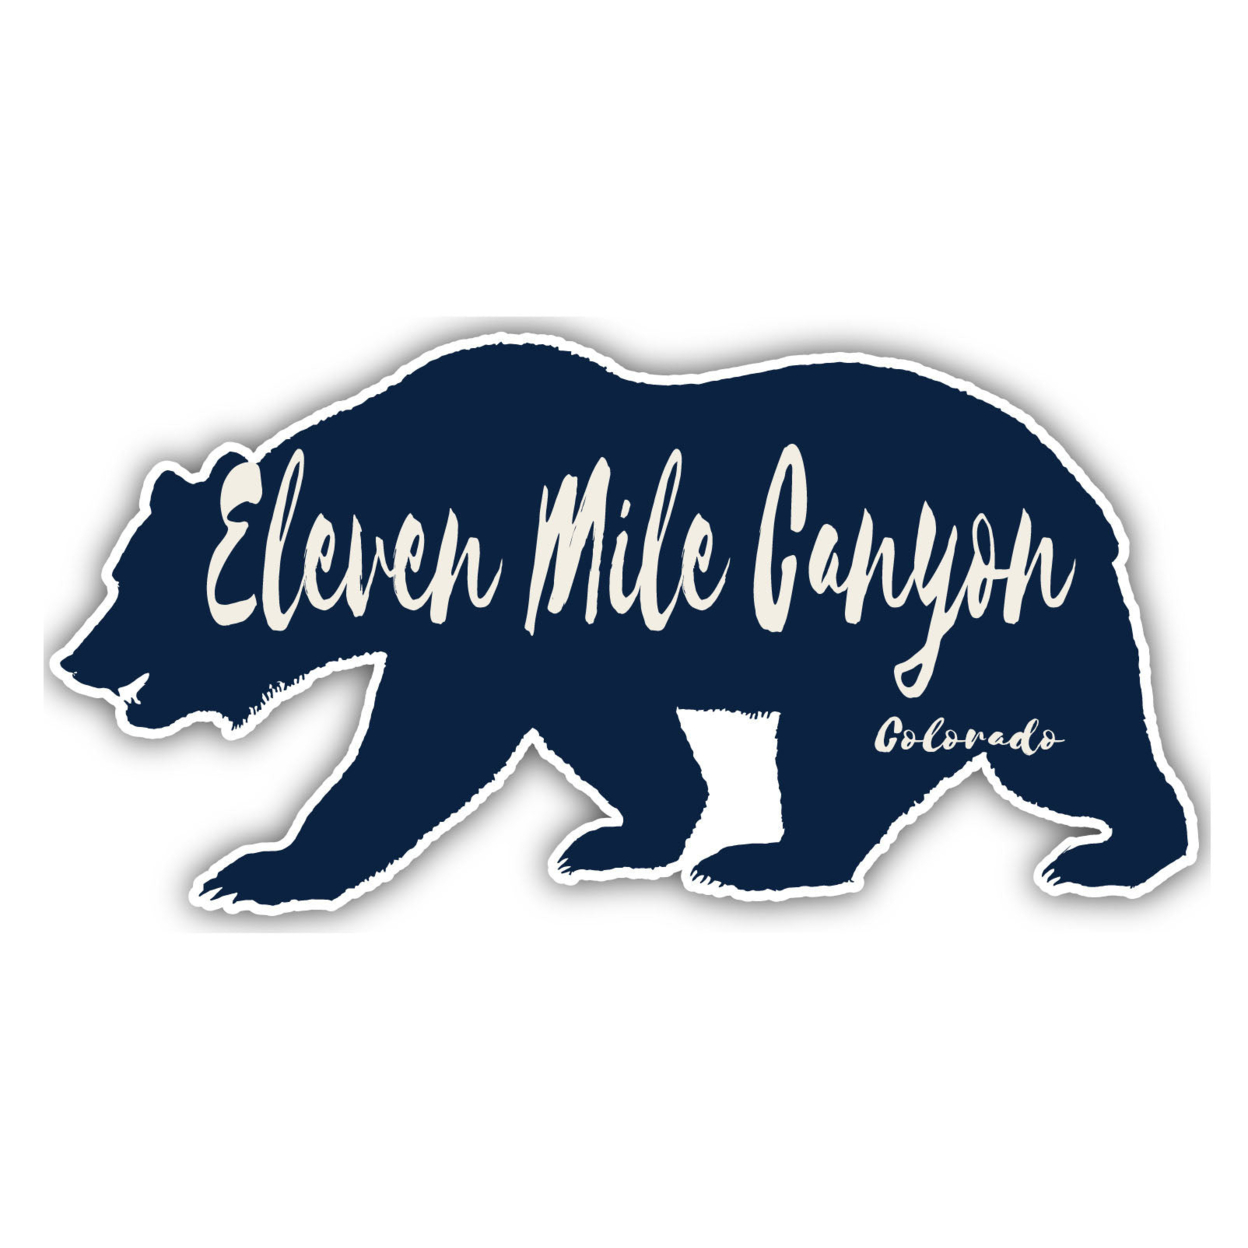 Eleven Mile Canyon Colorado Souvenir Decorative Stickers (Choose Theme And Size) - Single Unit, 4-Inch, Tent